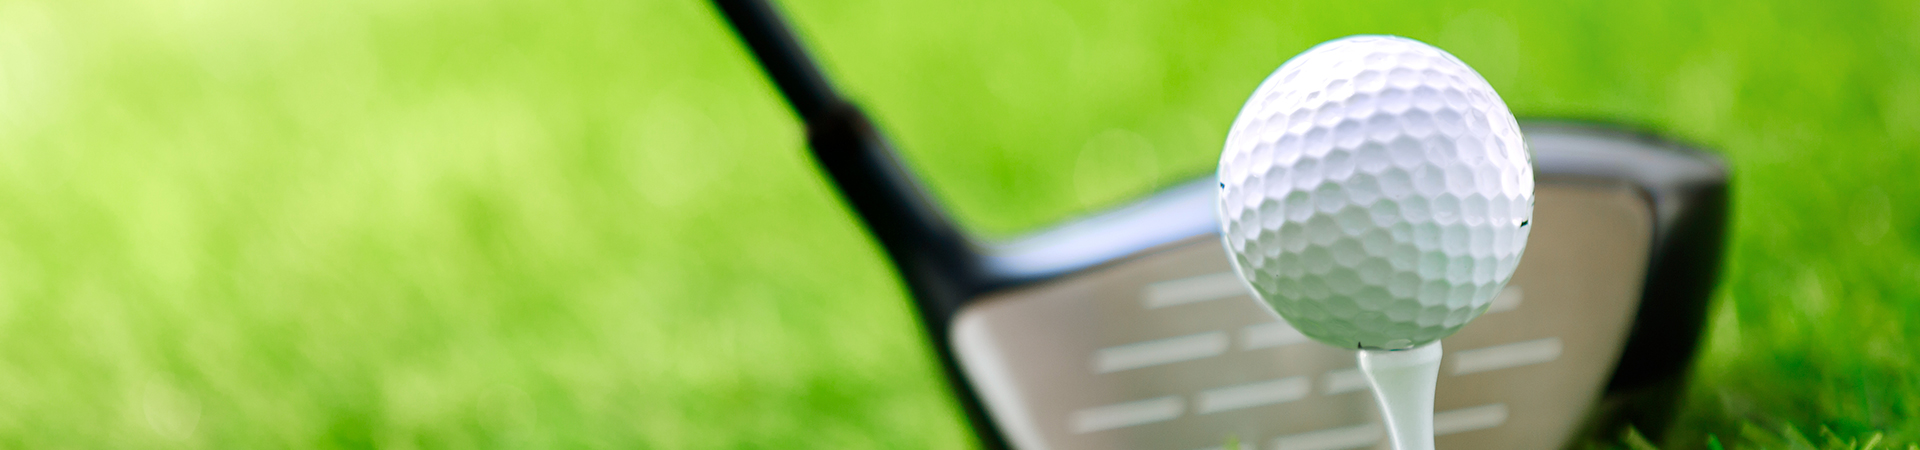 Golf Rules Mobile App Development